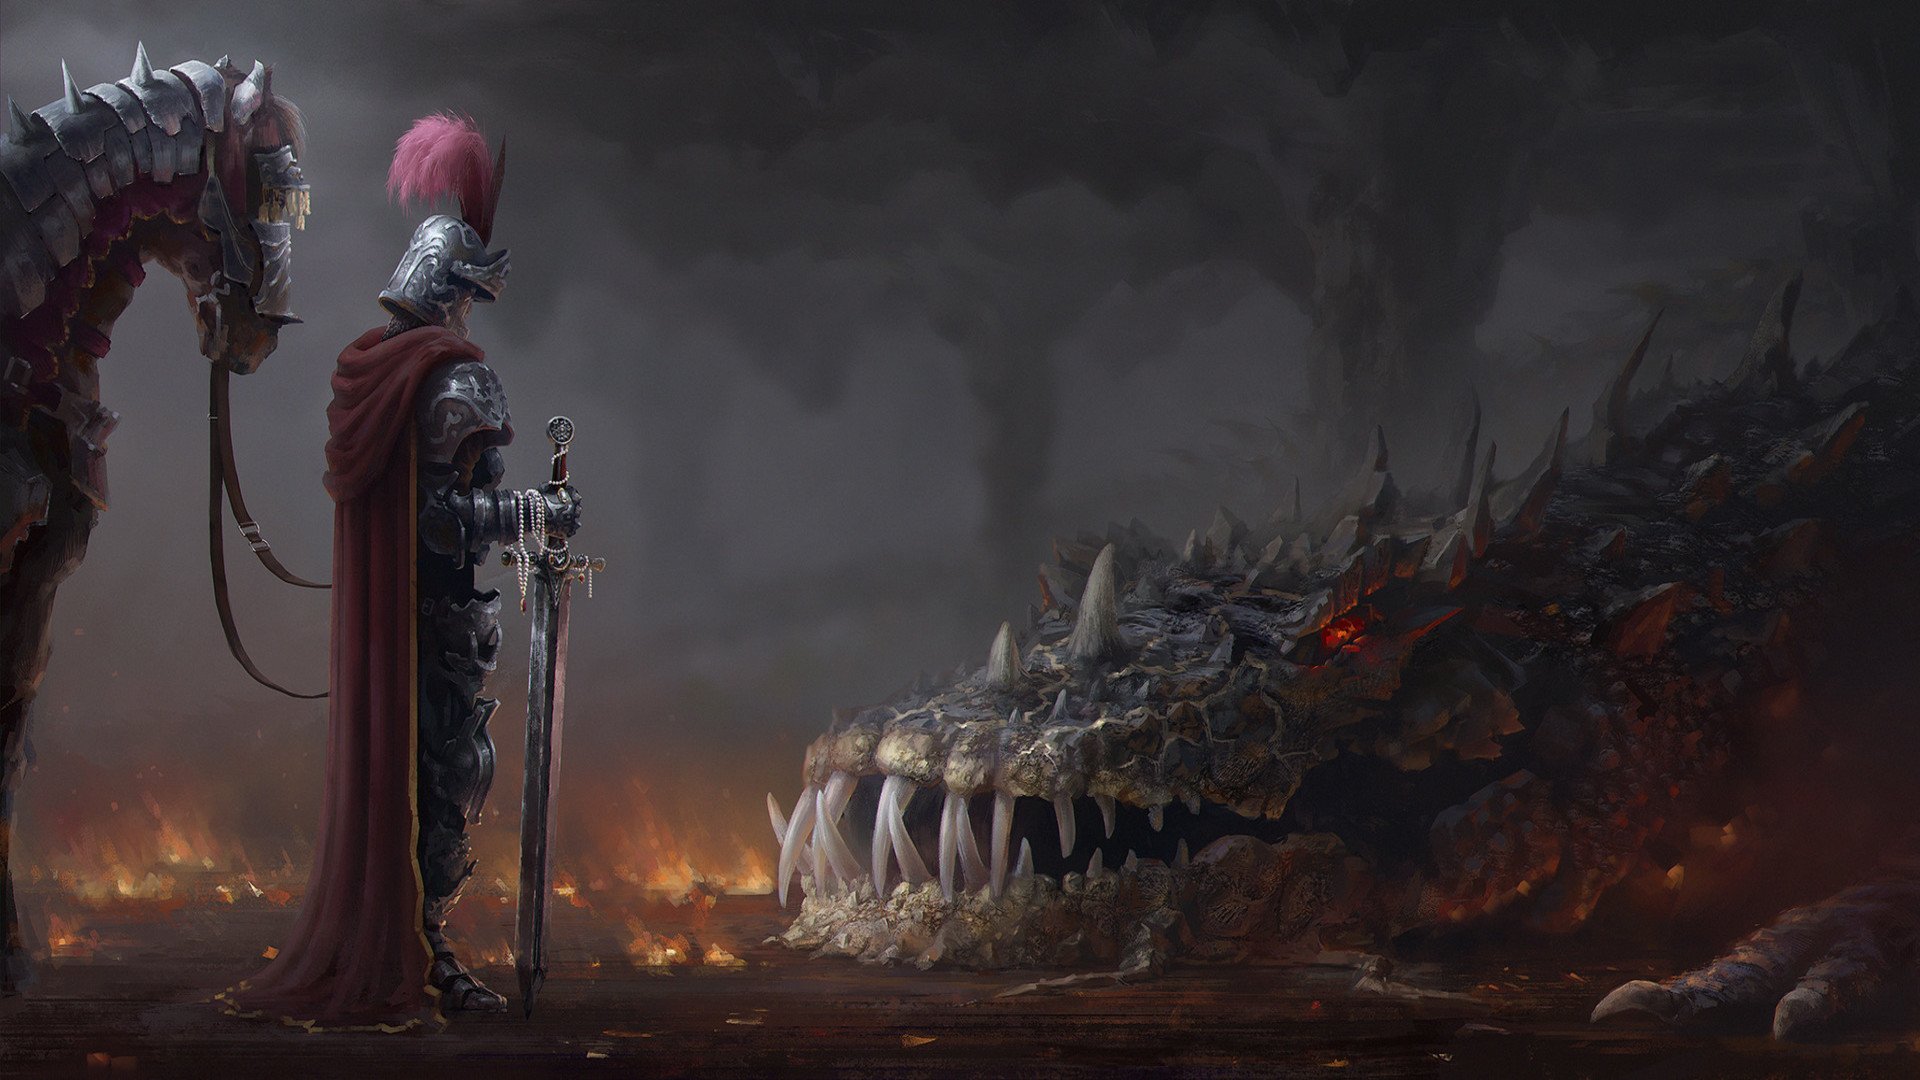 Digital Art Fantasy Art Andrew Palyanov Knight Dragon Artwork Fangs Smoke Sword Armor Horse Red Eyes 1920x1080